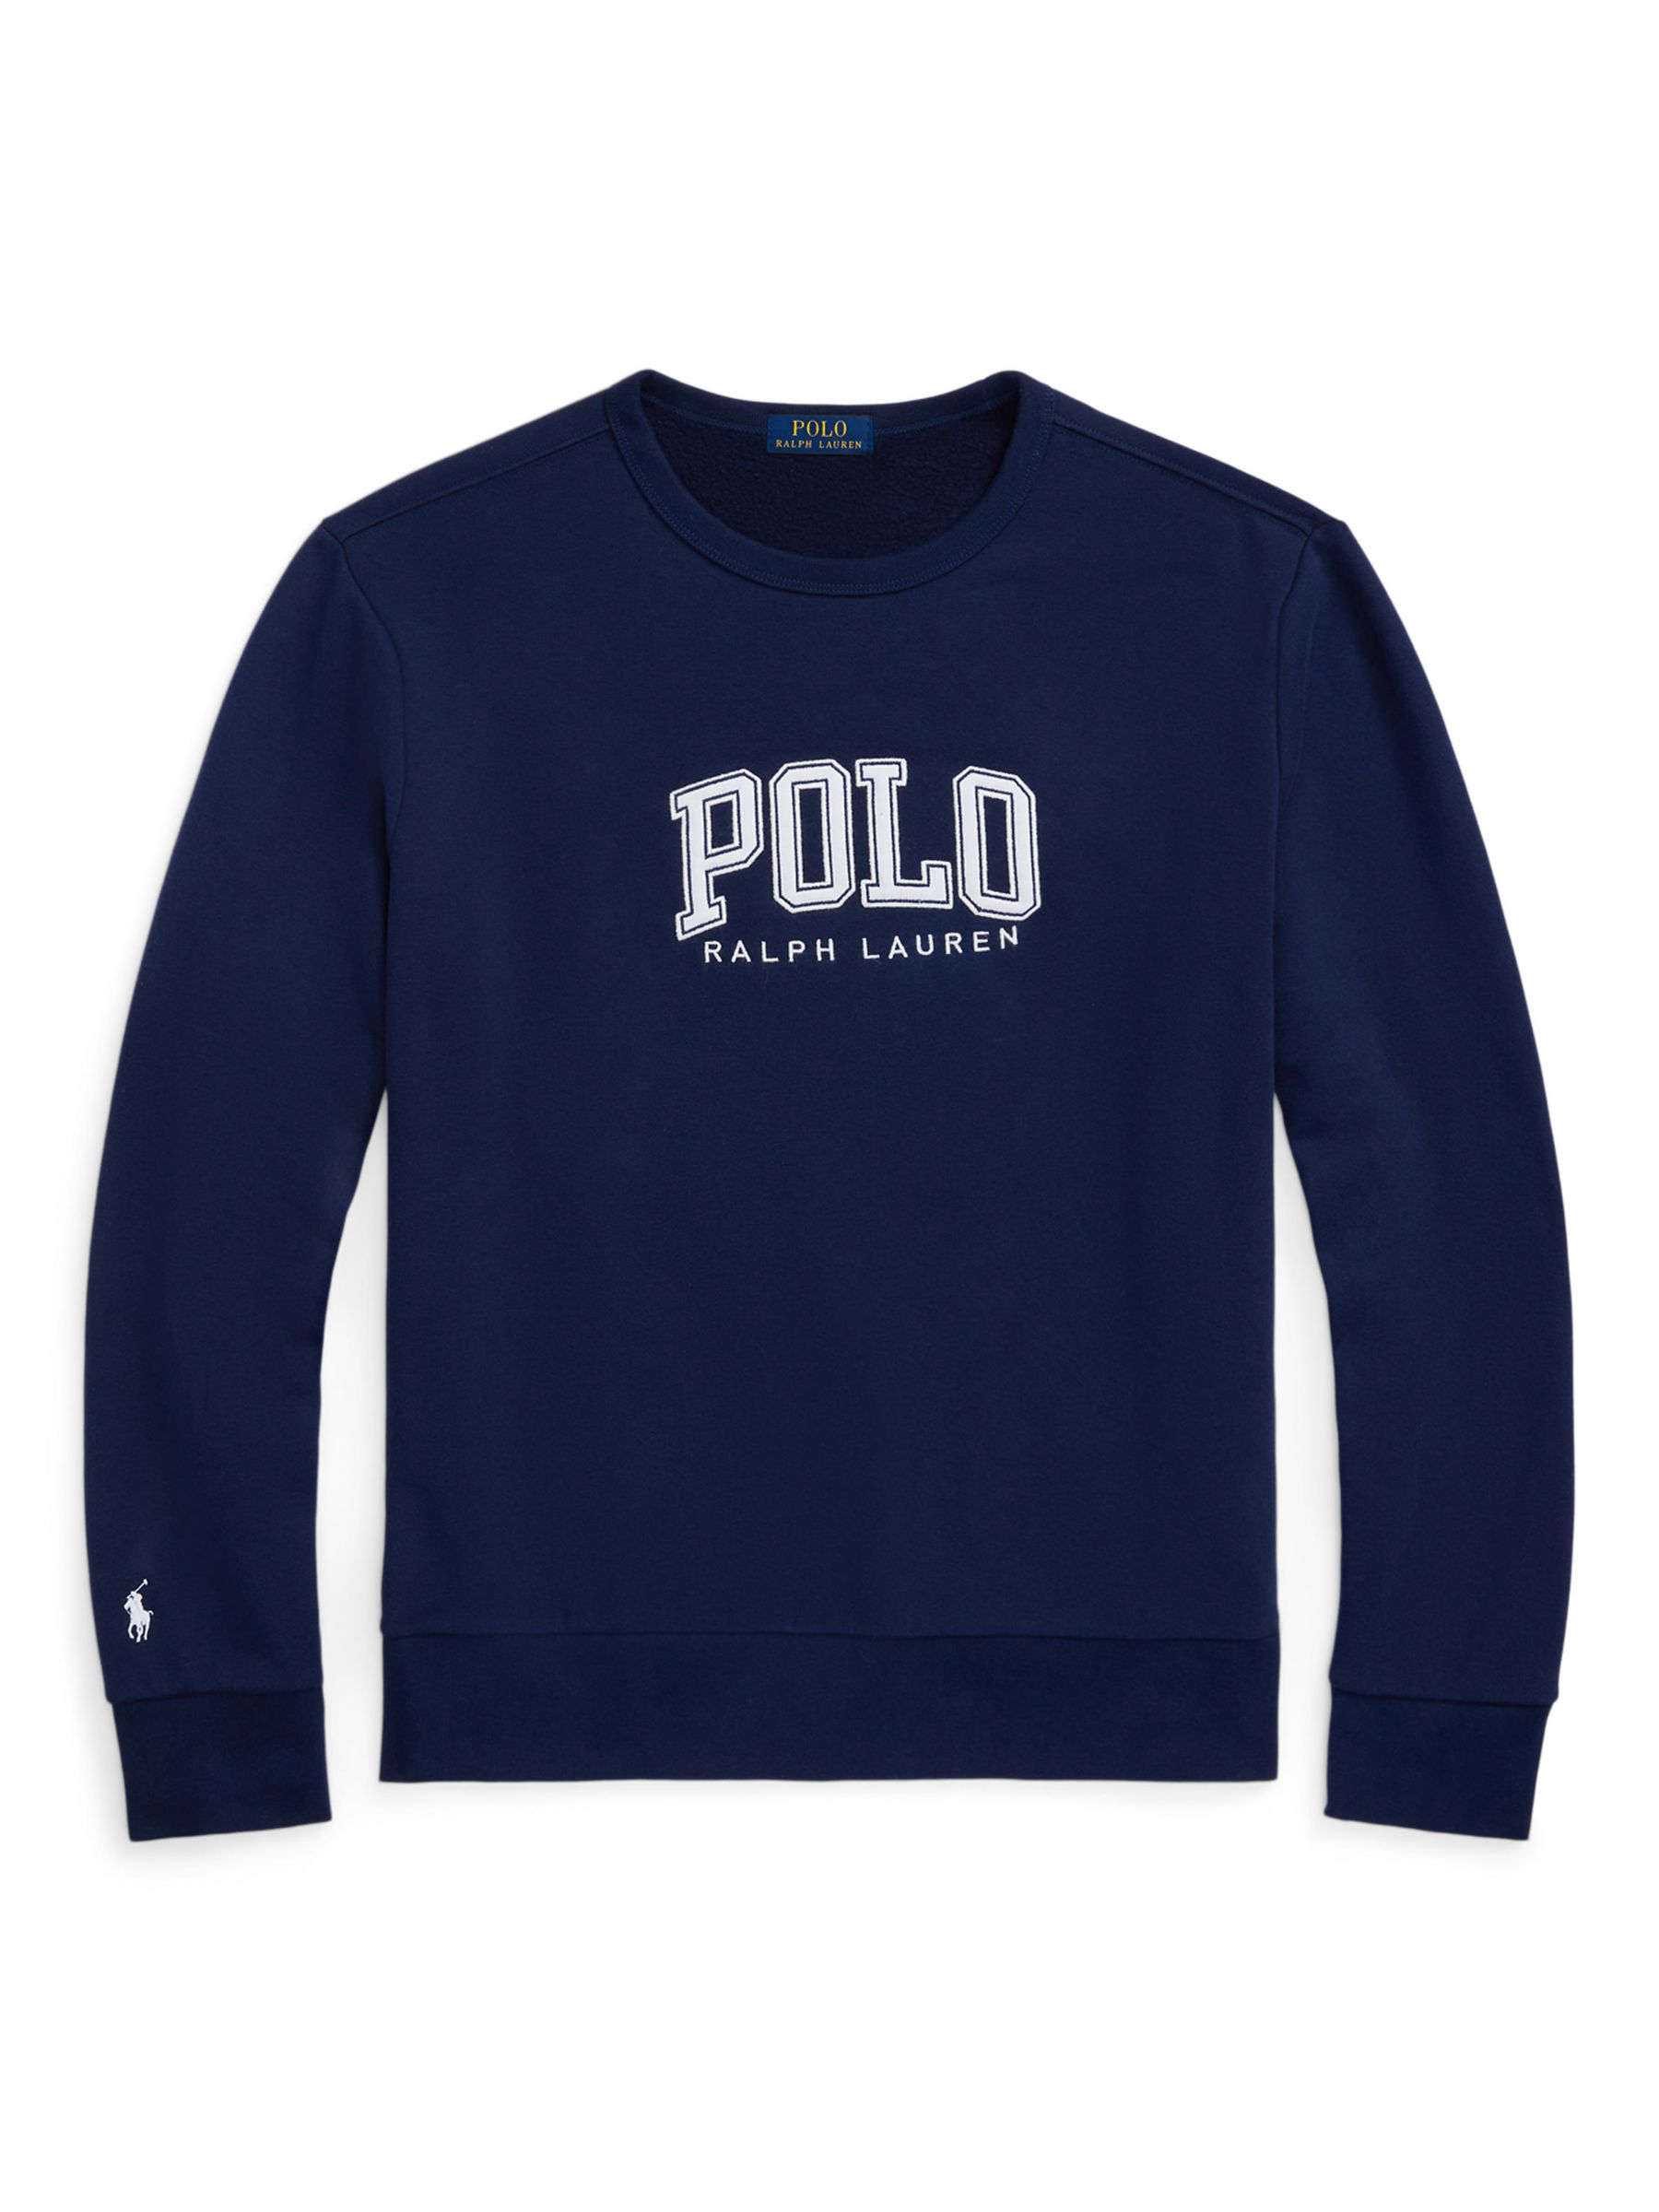 Ralph Lauren Polo Logo Embroidered Sweatshirt, Cruise Navy, S